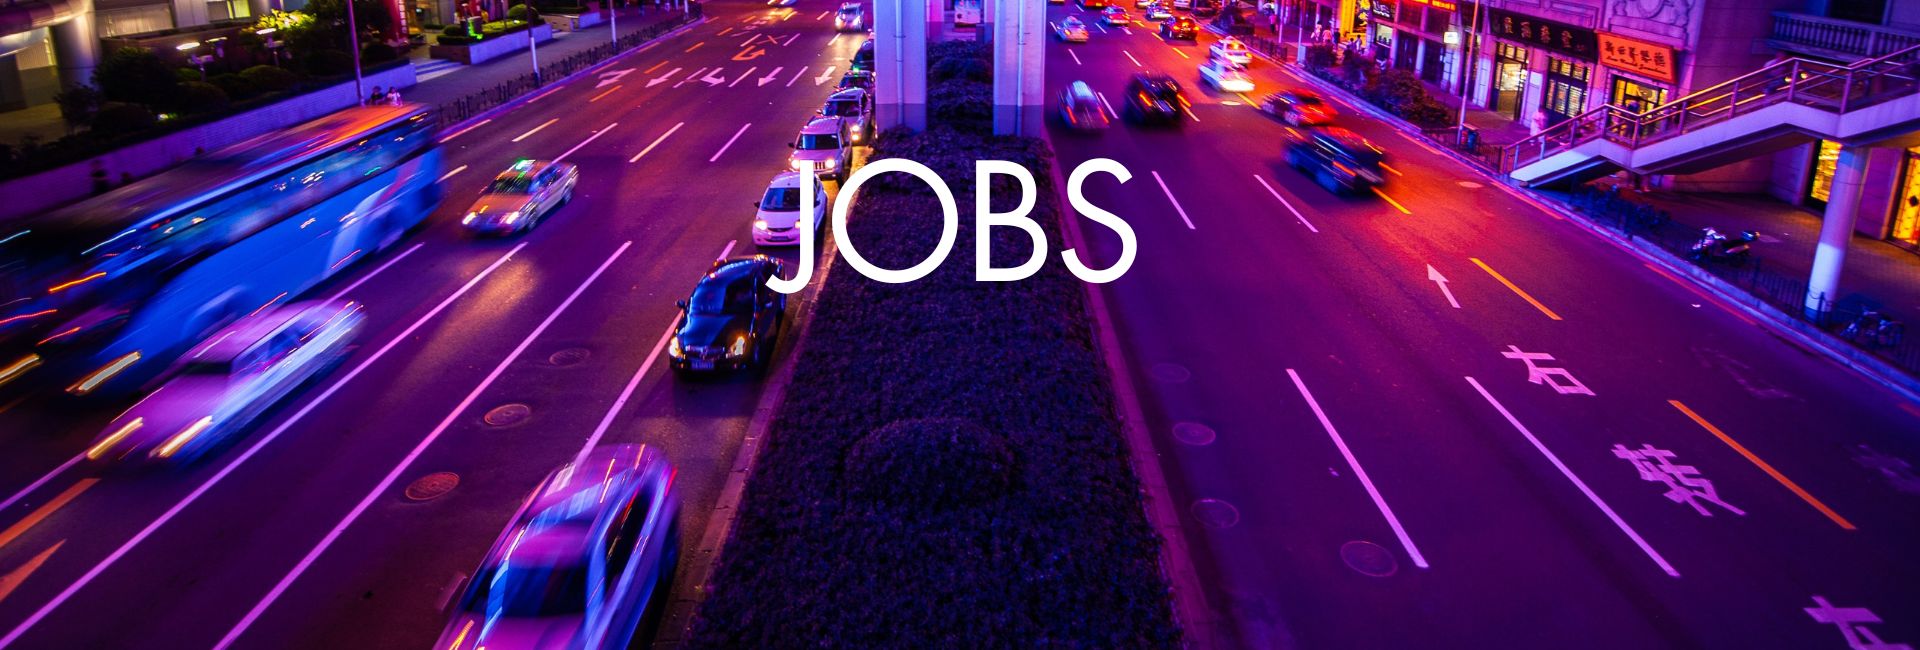 Jobs Banner Image